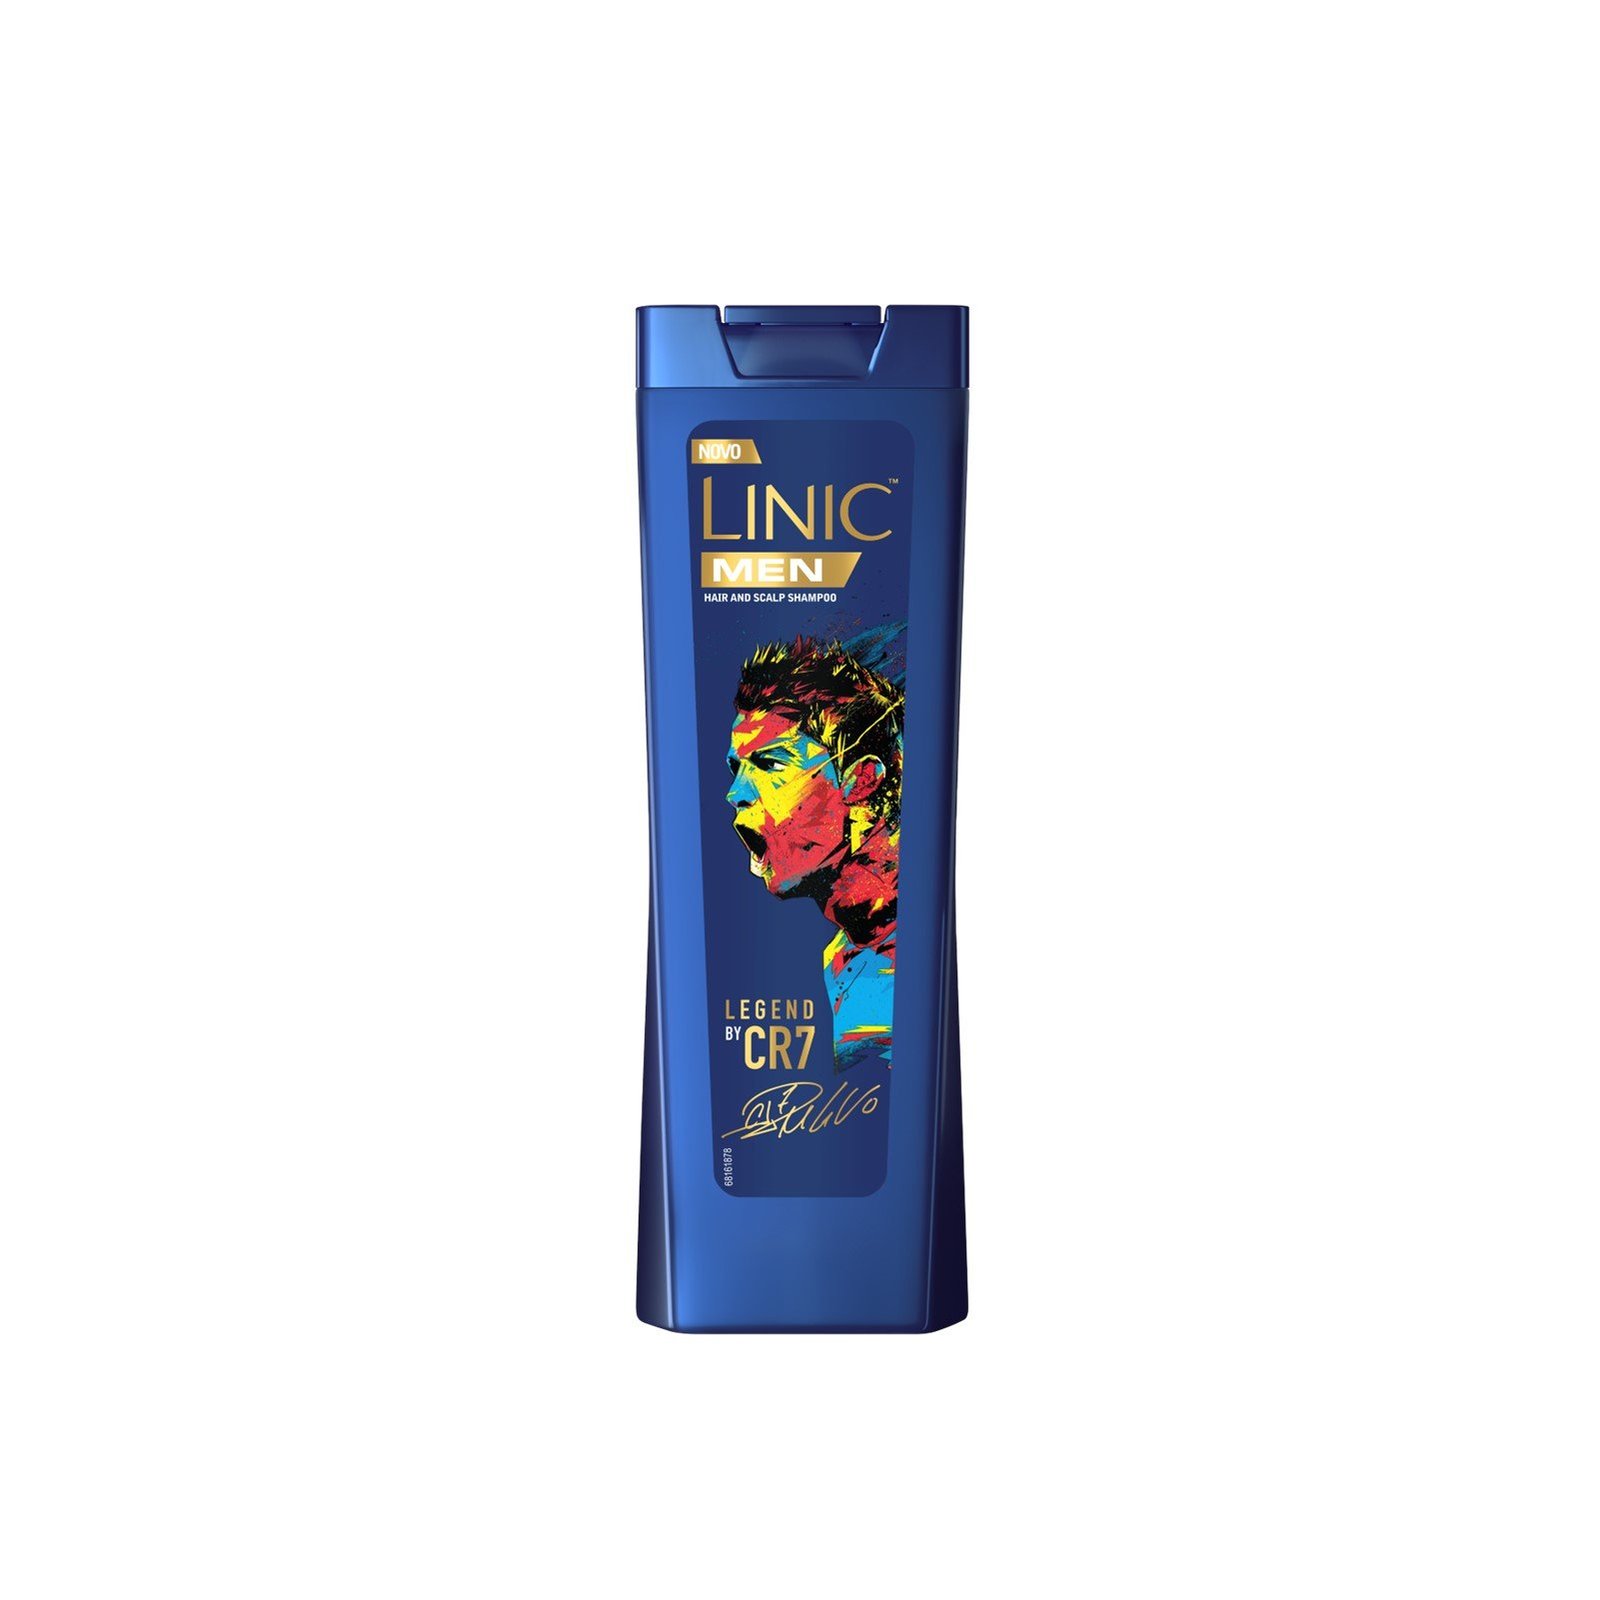 Linic Men Legend By CR7 Hair And Scalp Shampoo 225ml